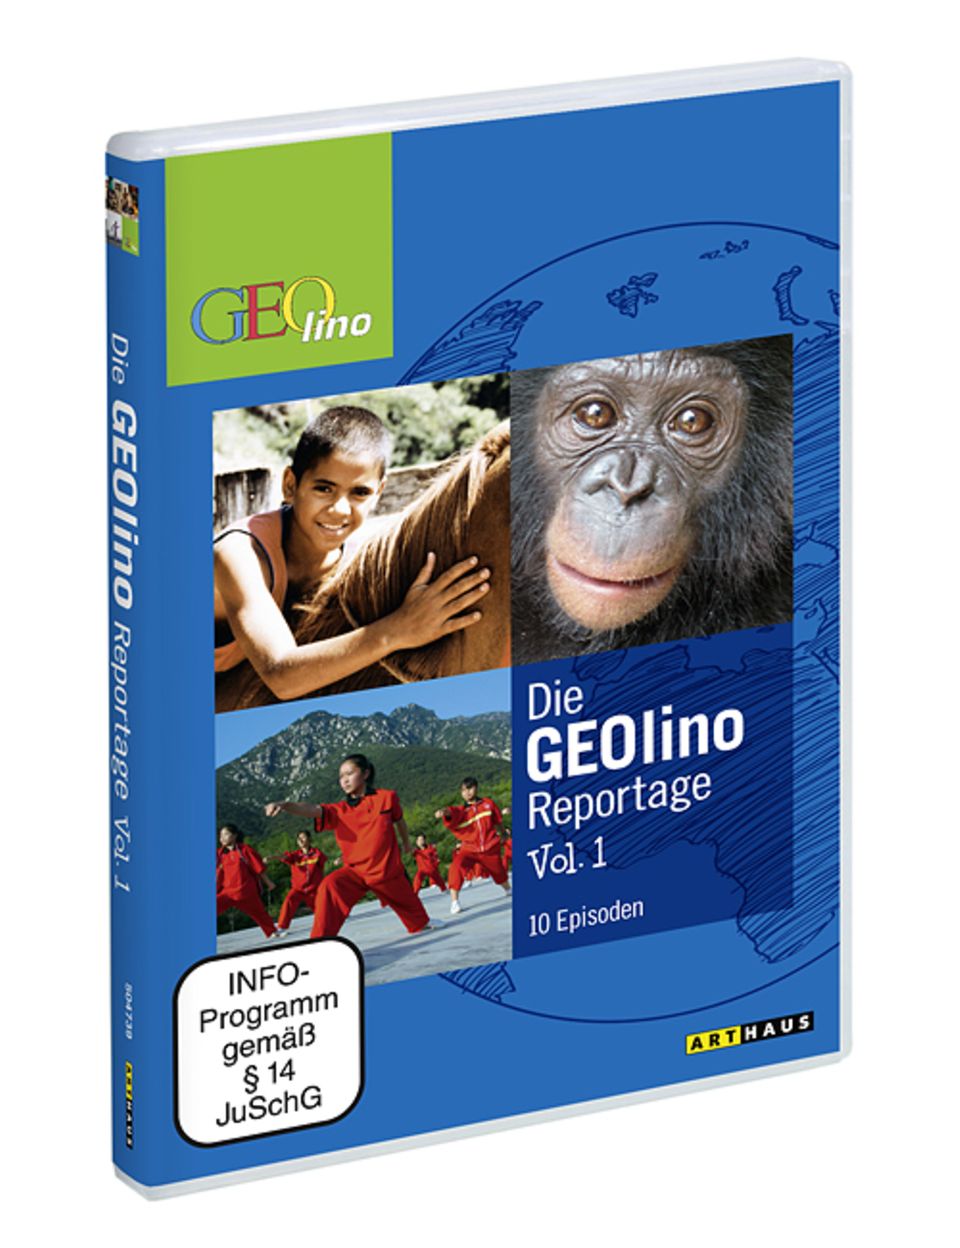 GEOlino DVDs: Die GEOlino Reportage Vol. 1